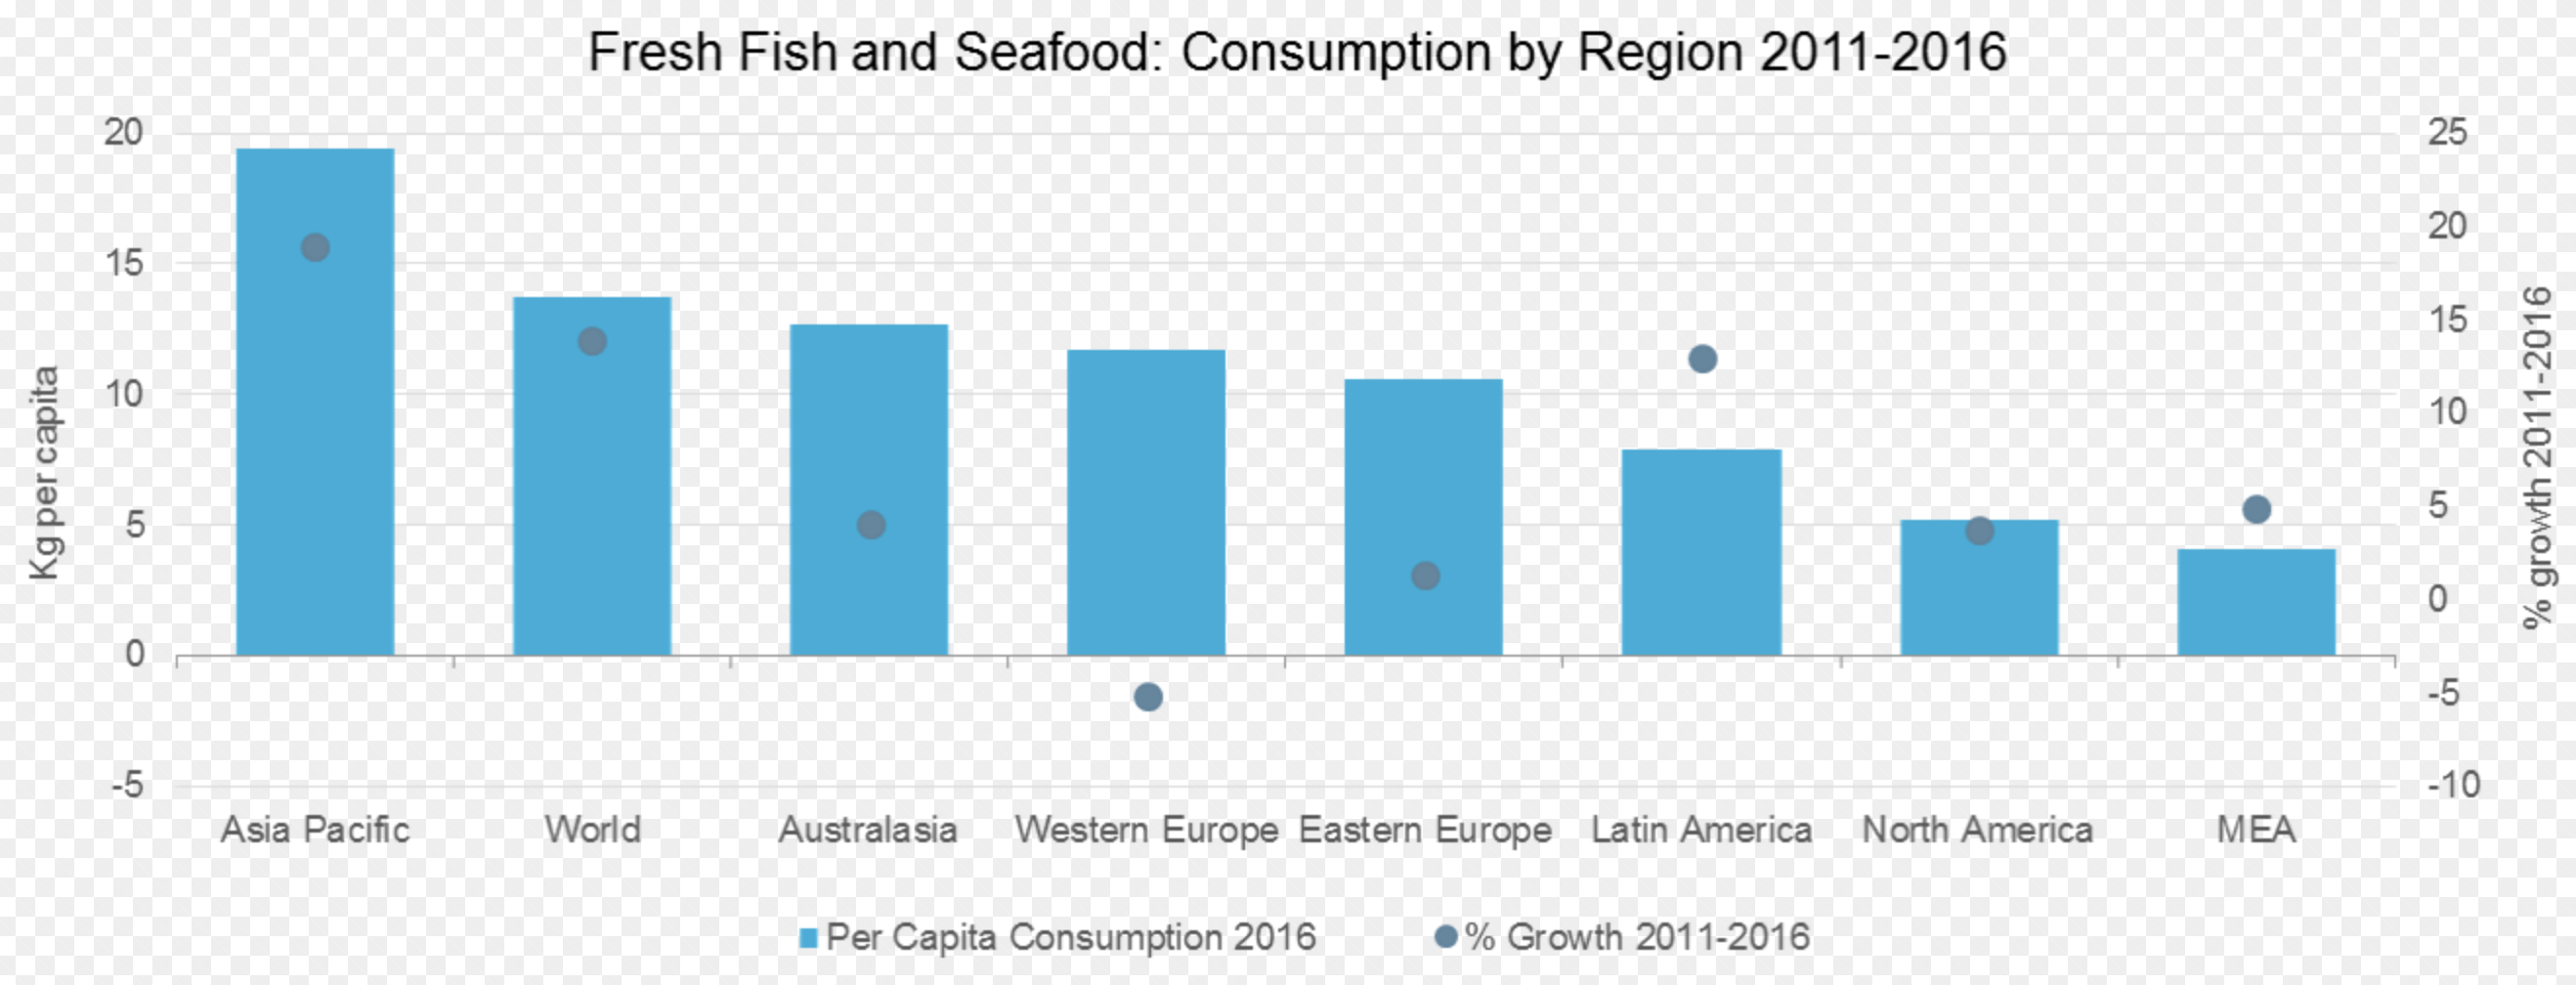 Euromonitor Says Fresh Fish Consumption Falling in Europe